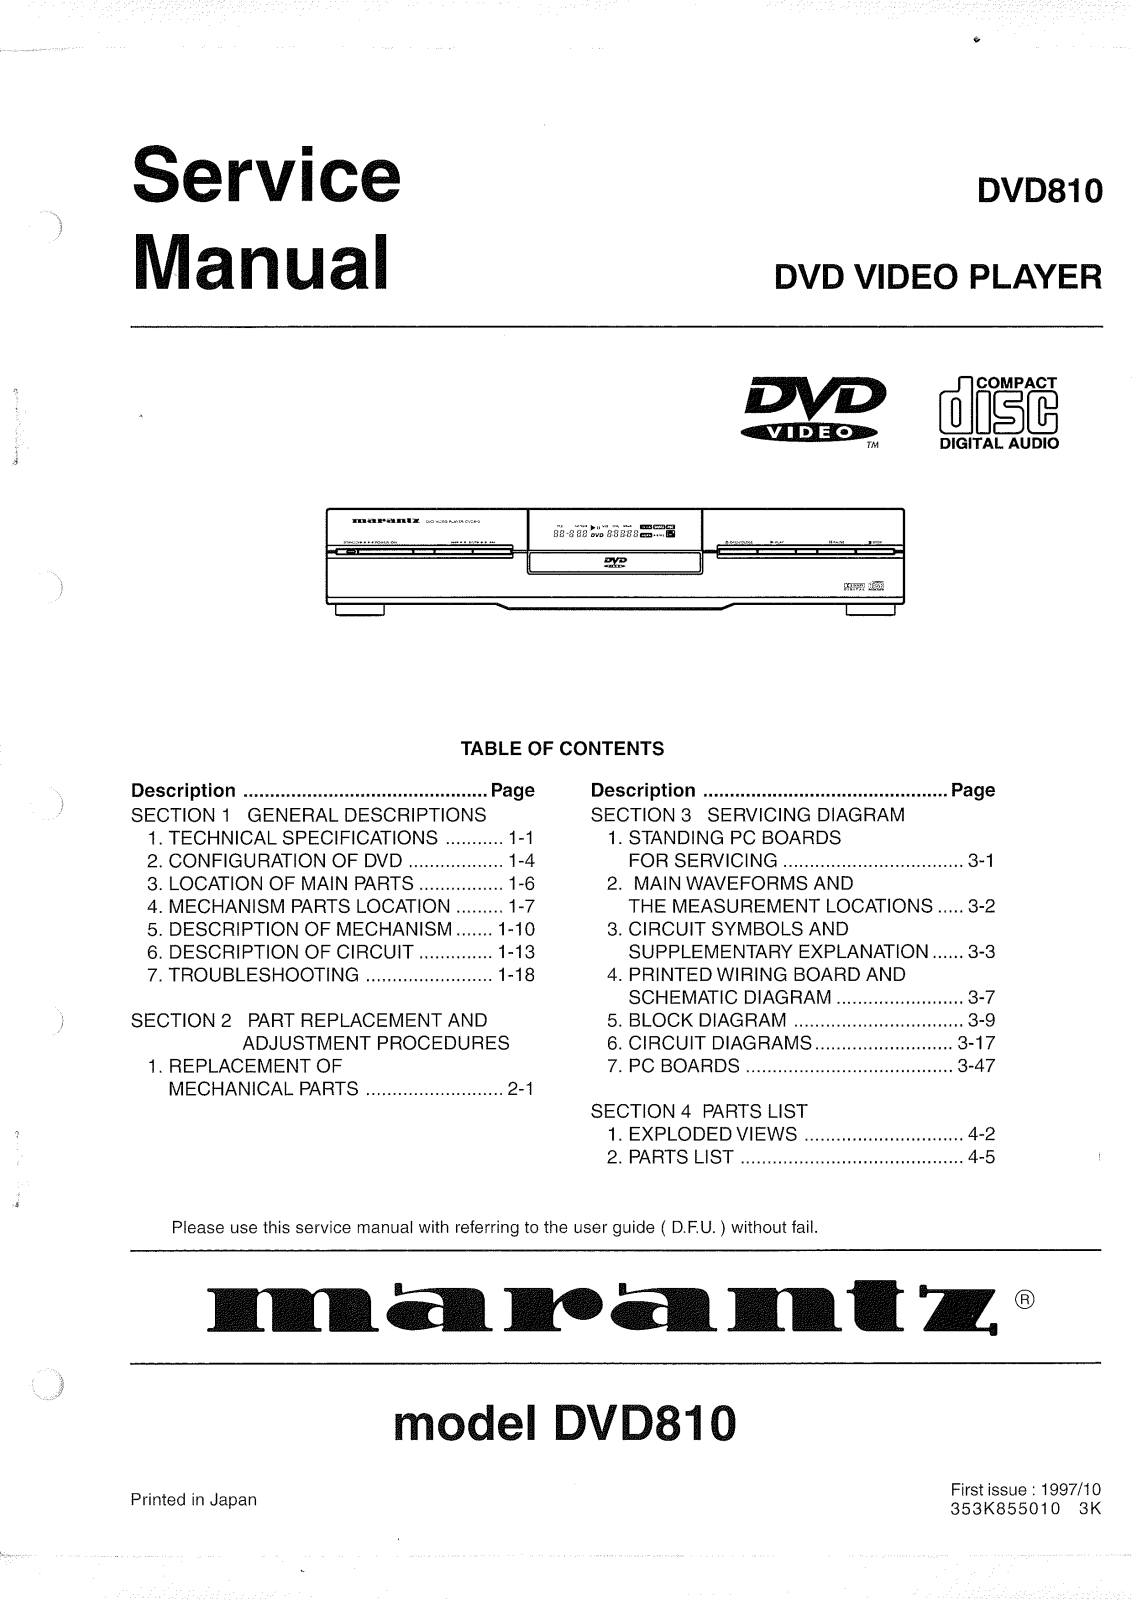 Marantz DVD-810 Service Manual